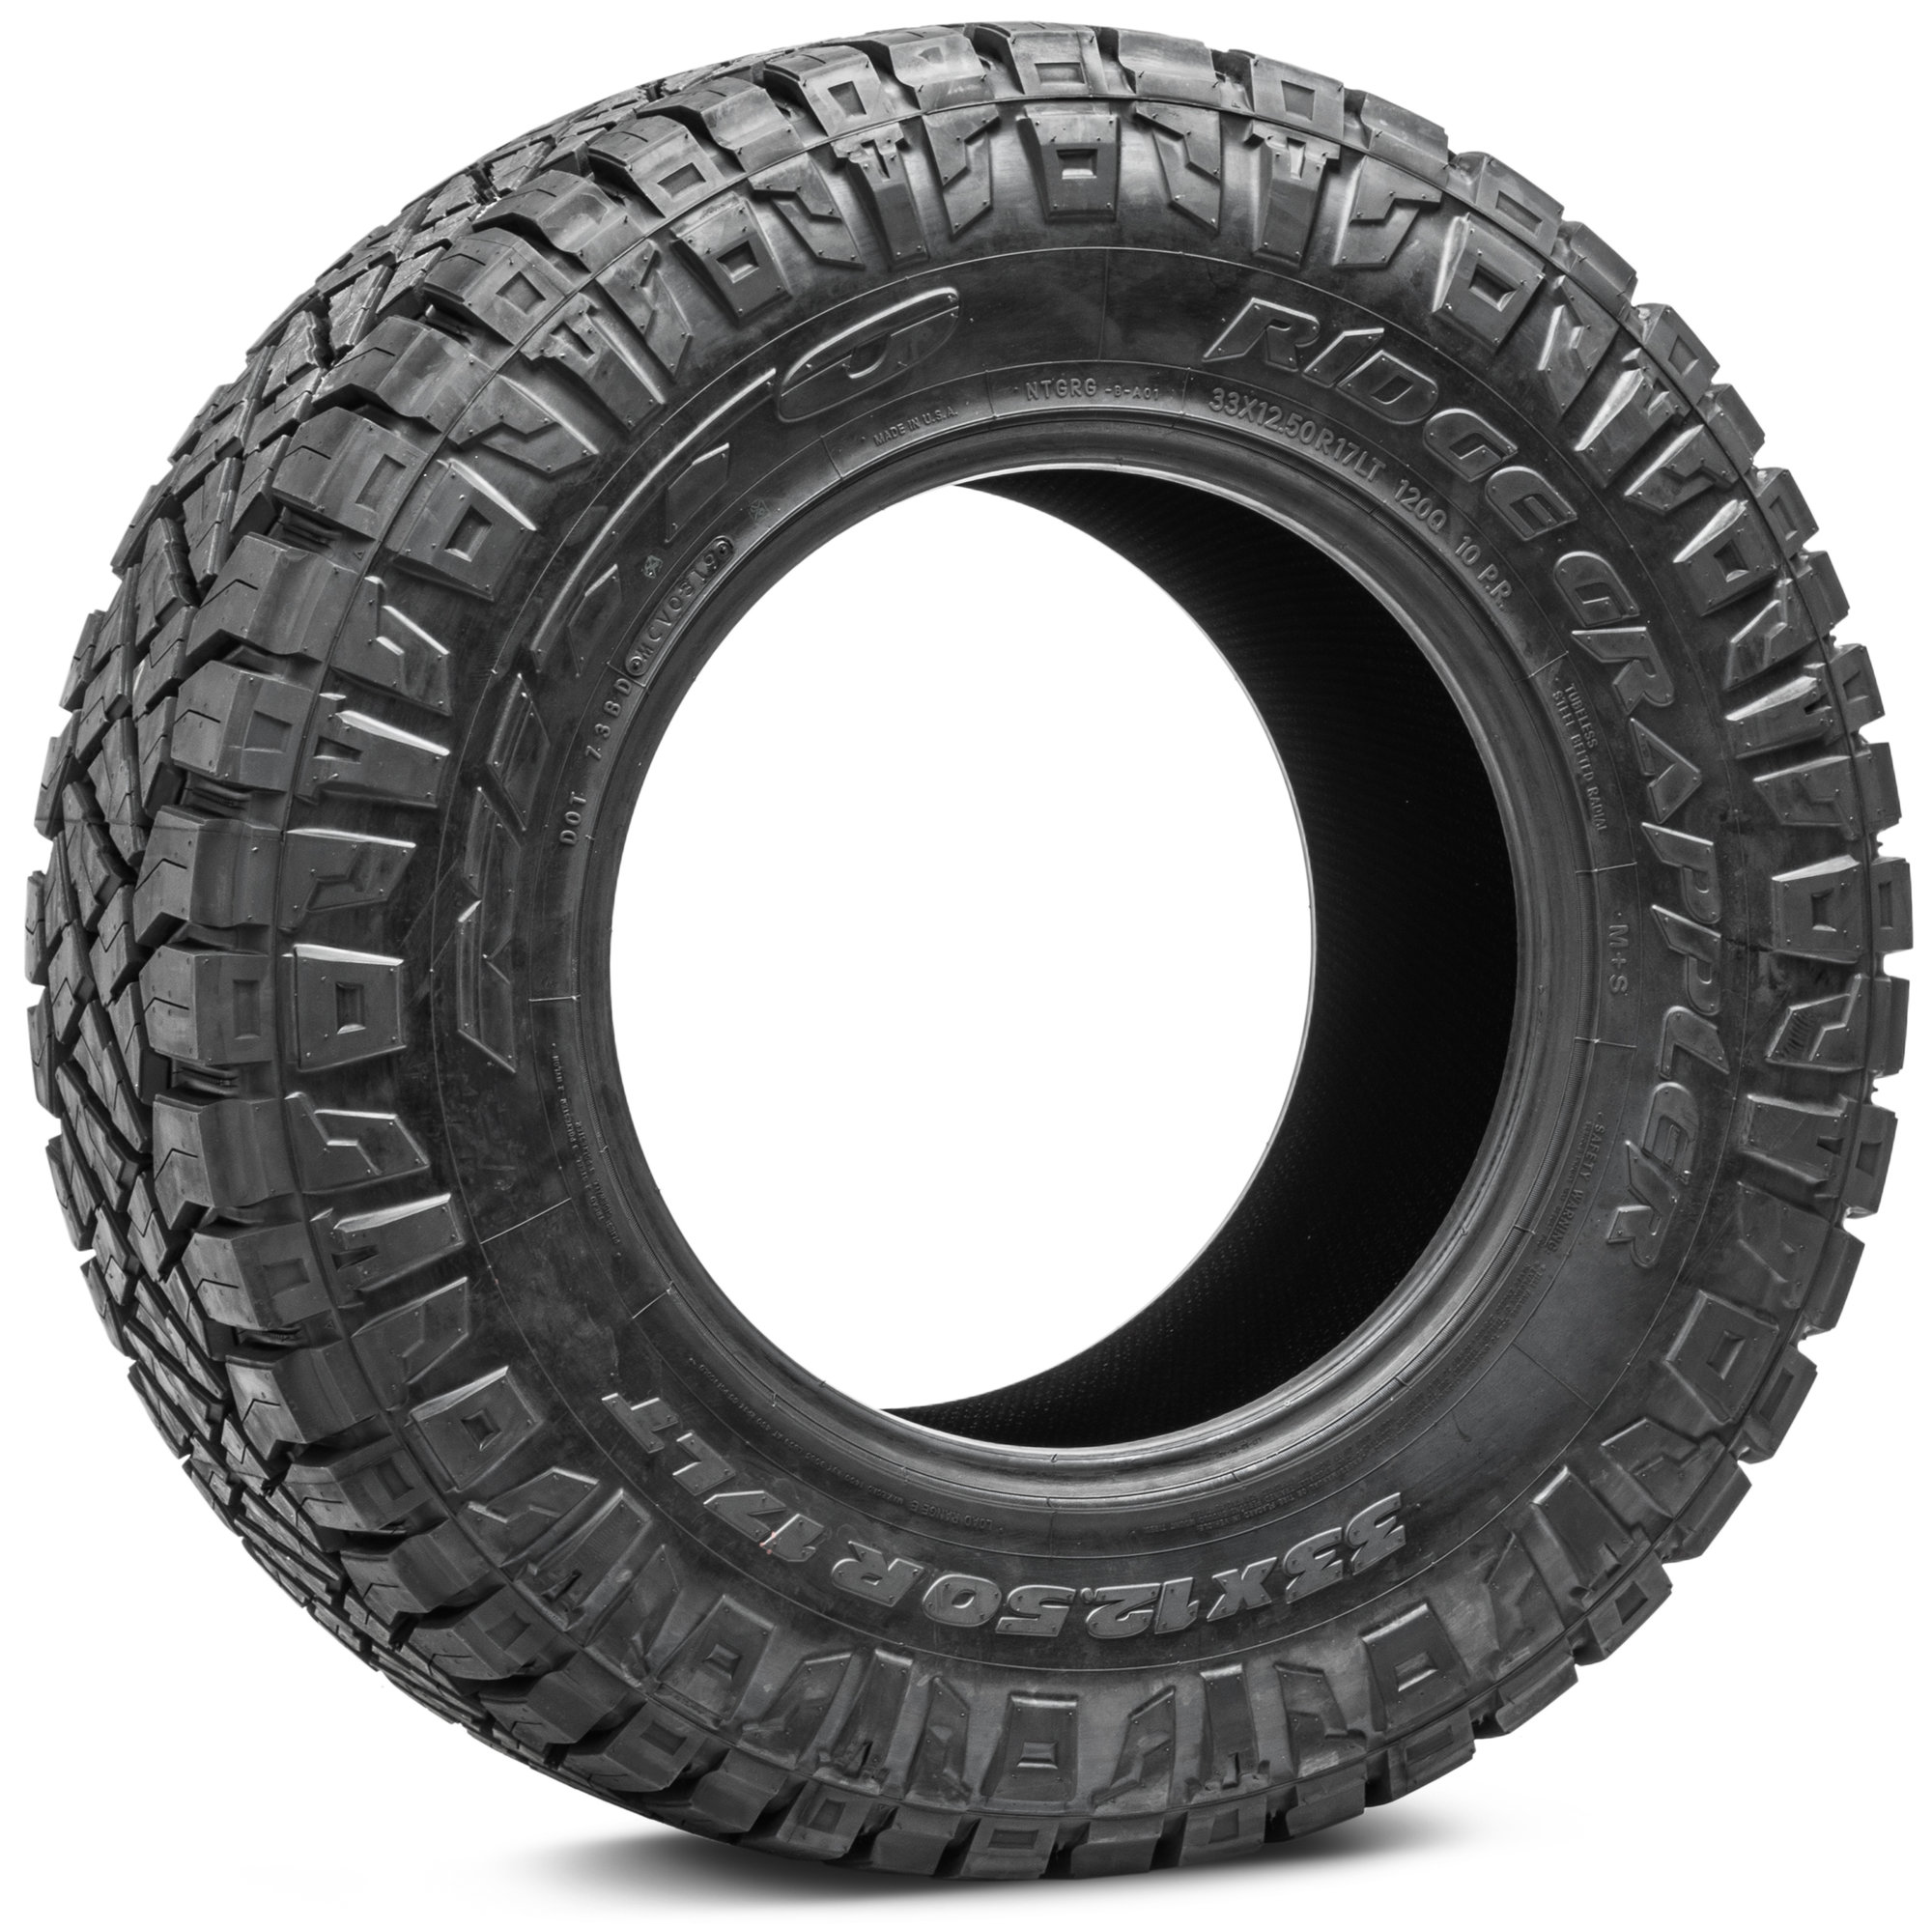 Nitto Ridge Grappler Tire | Quadratec